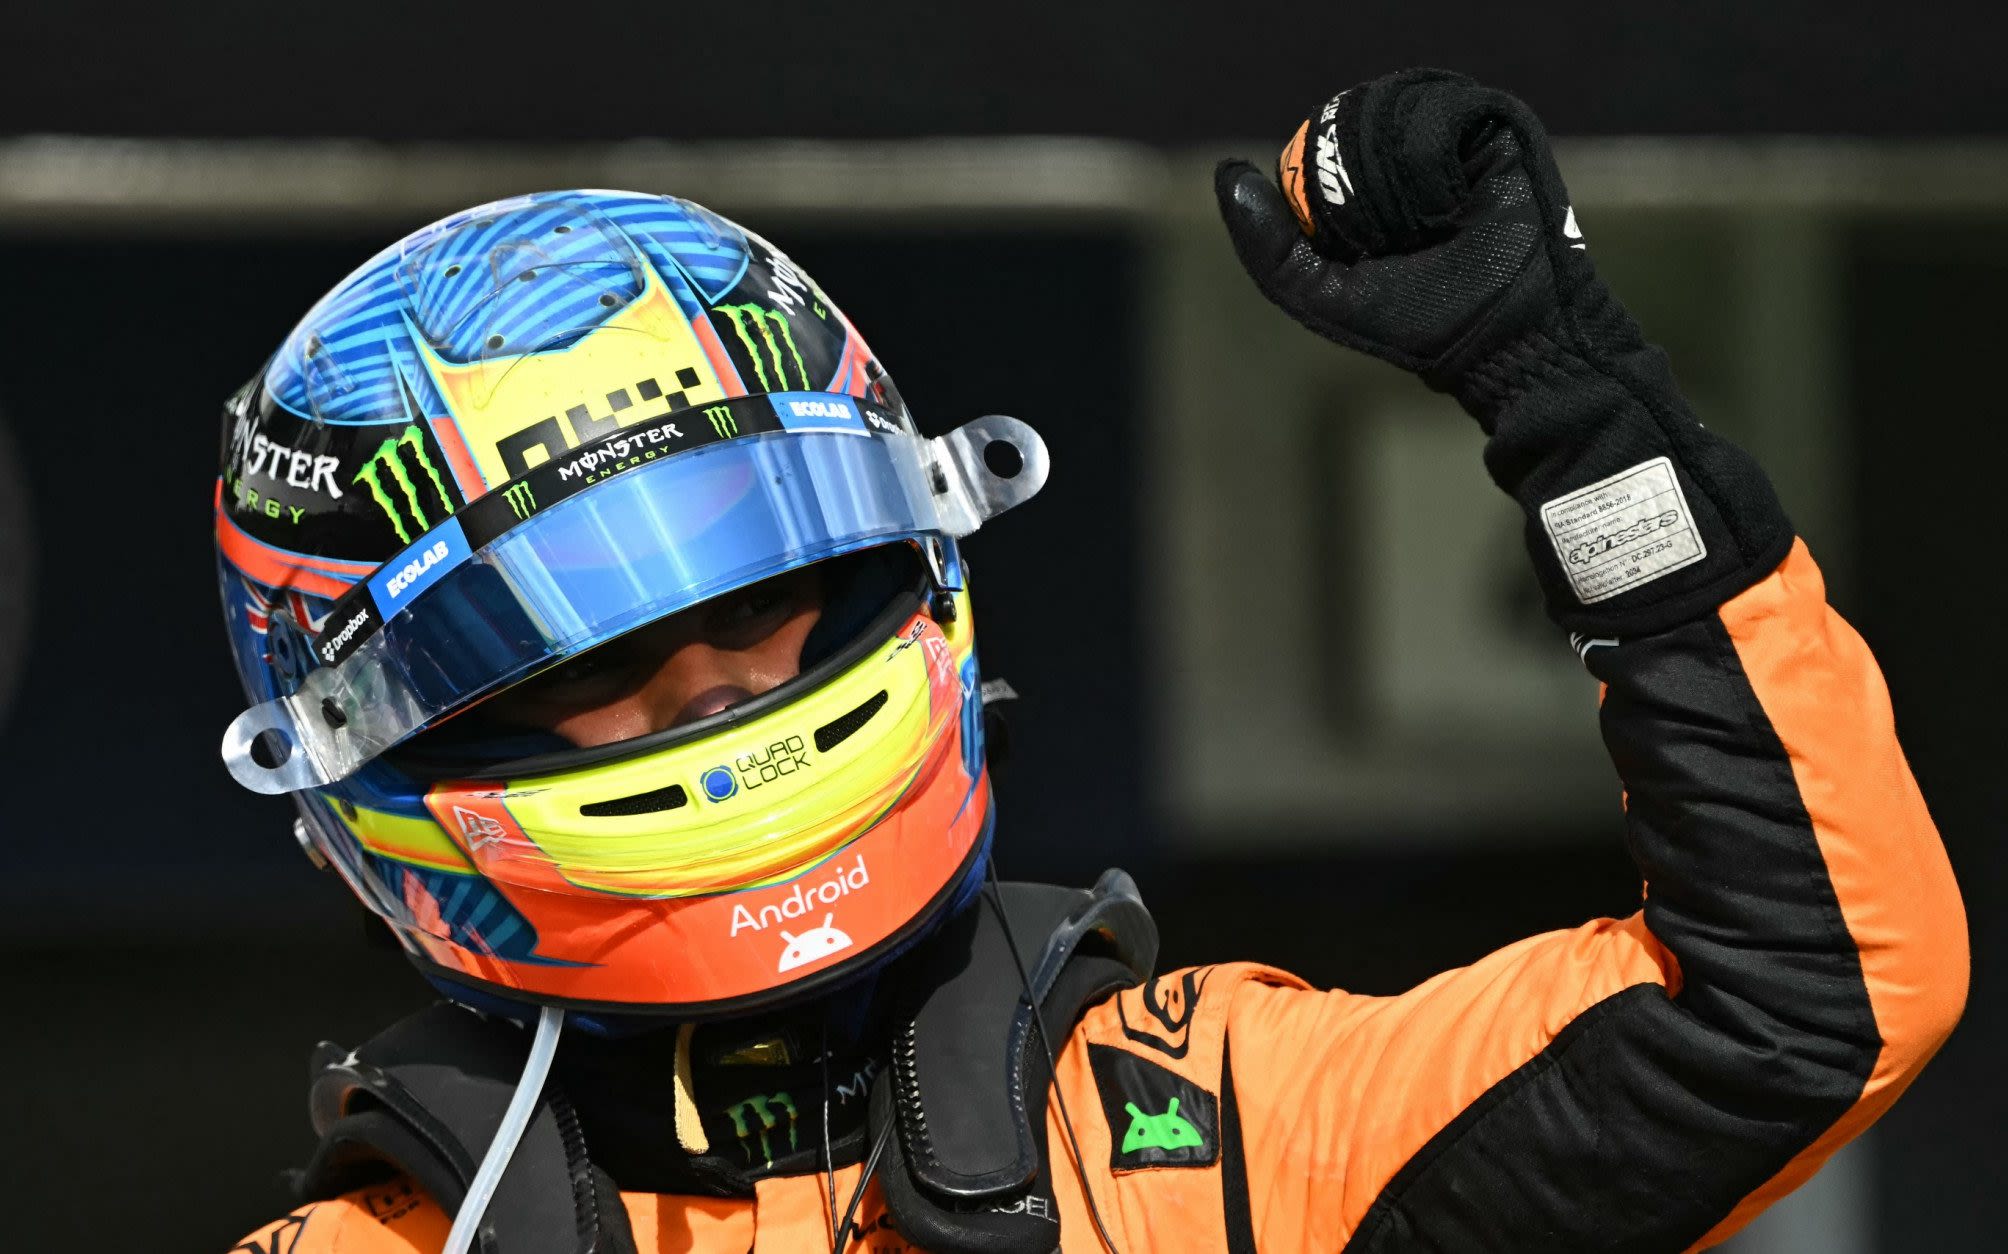 Lando Norris fumes after McLaren team orders allow Oscar Piastri to win Hungarian Grand Prix